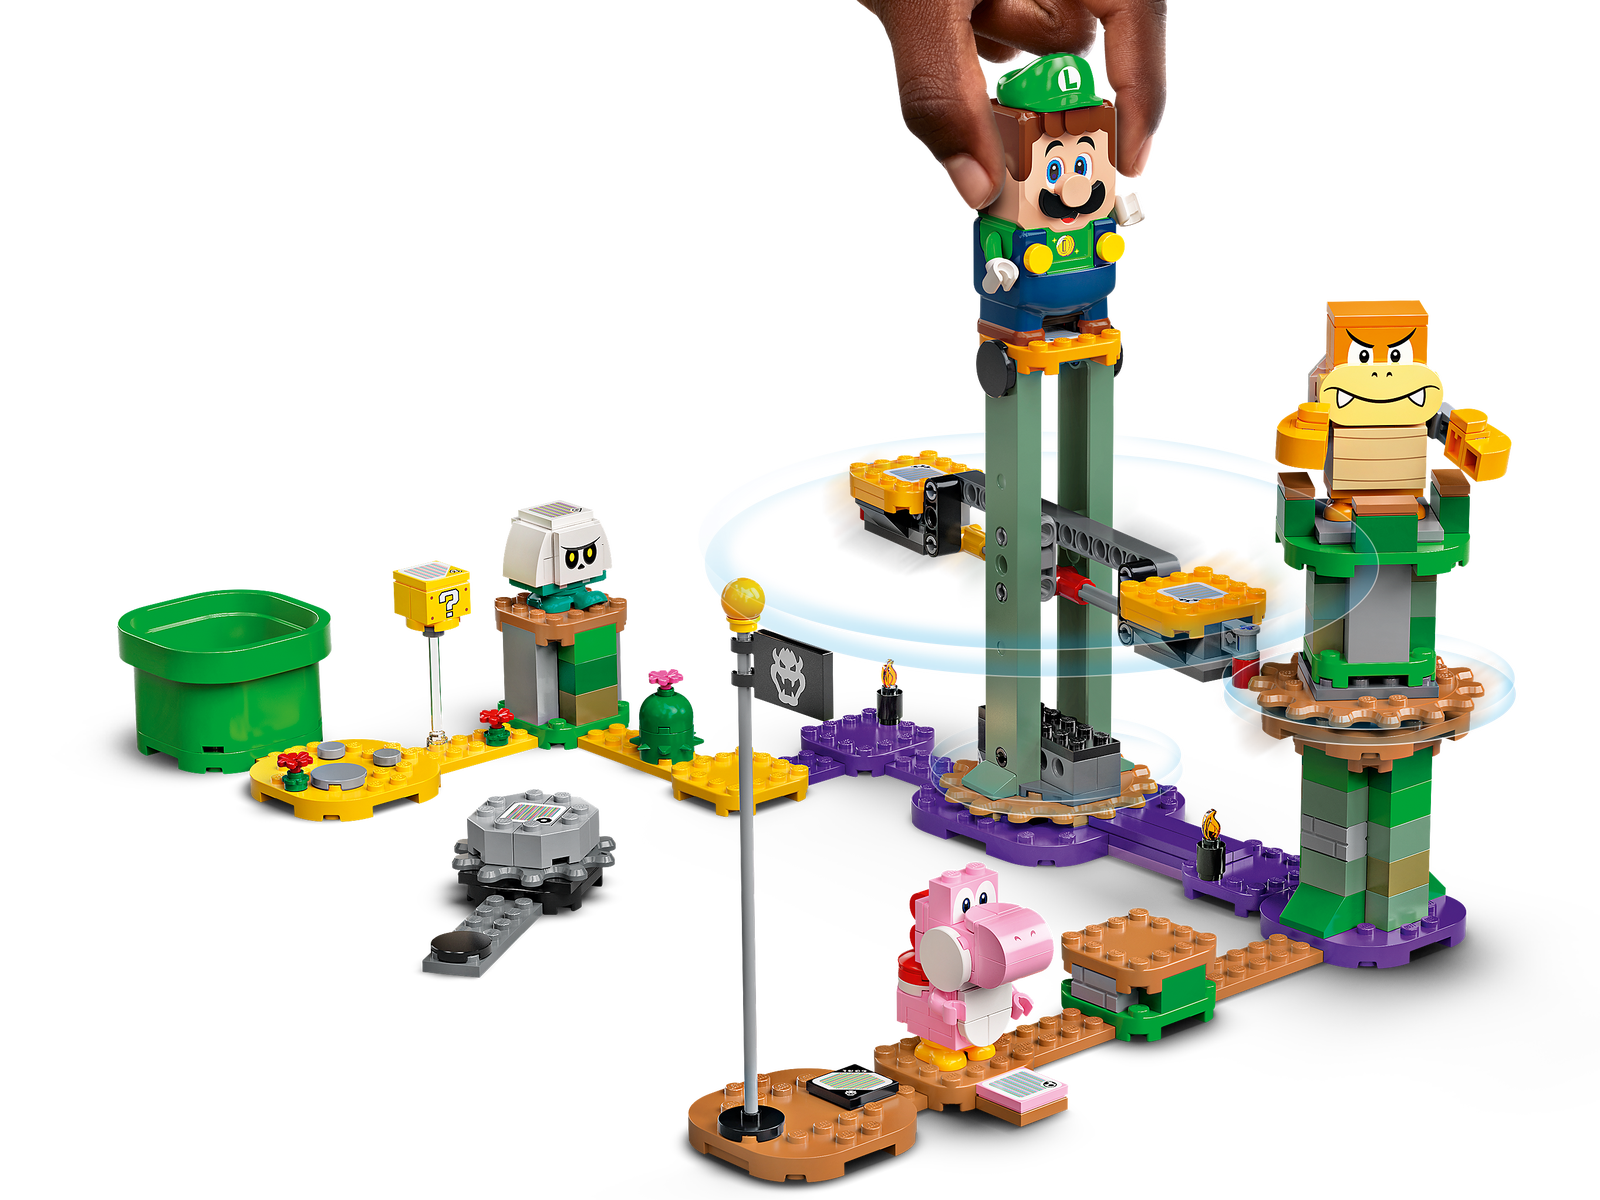 Lego Super Mario Adventures with Luigi Starter Course 71387